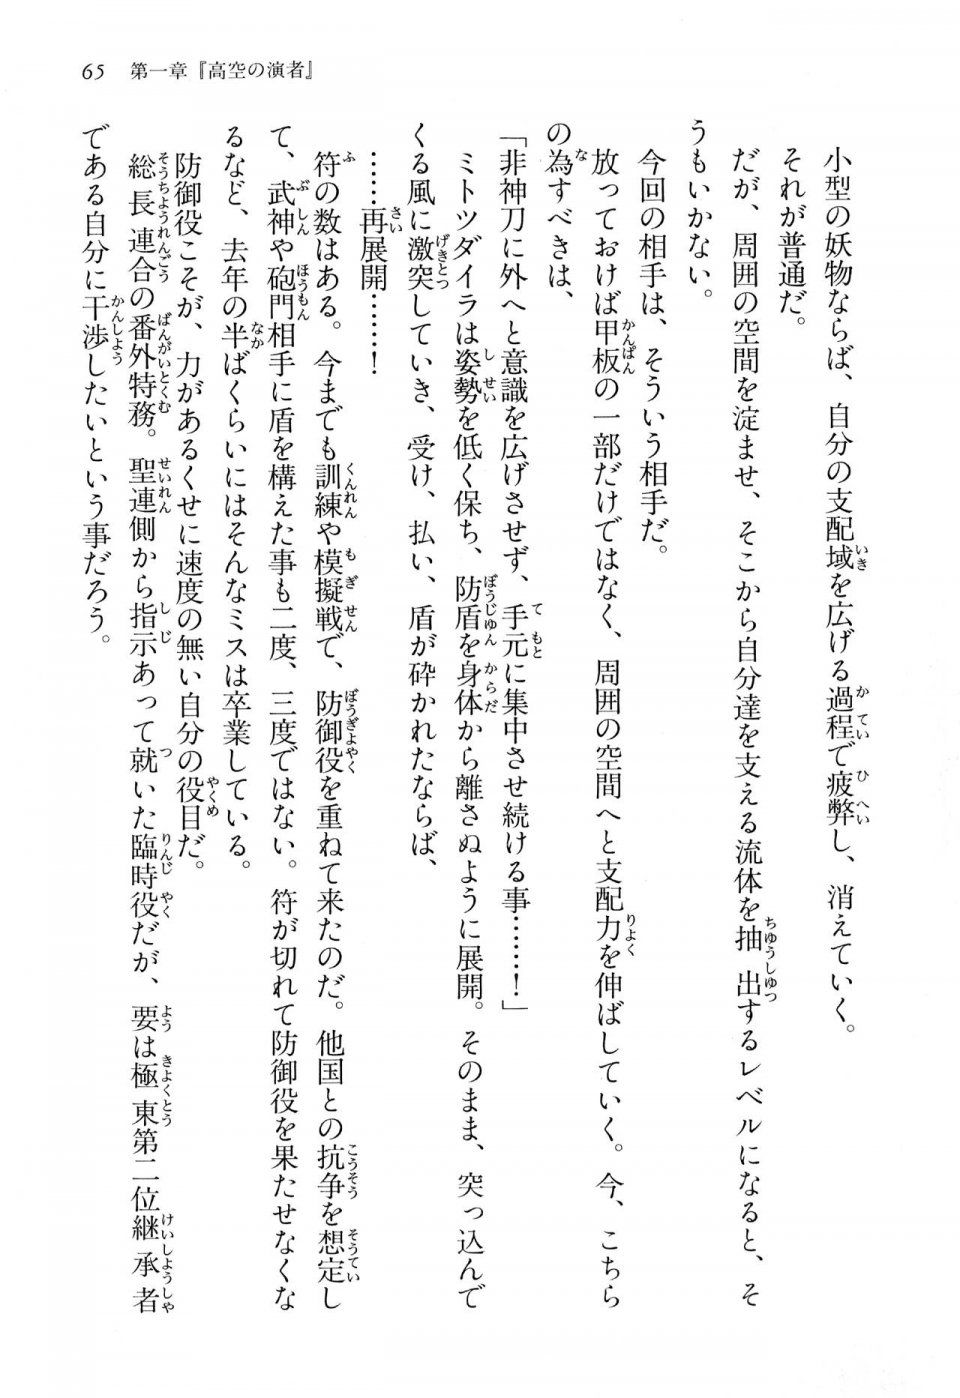 Kyoukai Senjou no Horizon BD Special Mininovel Vol 1(1A) - Photo #69